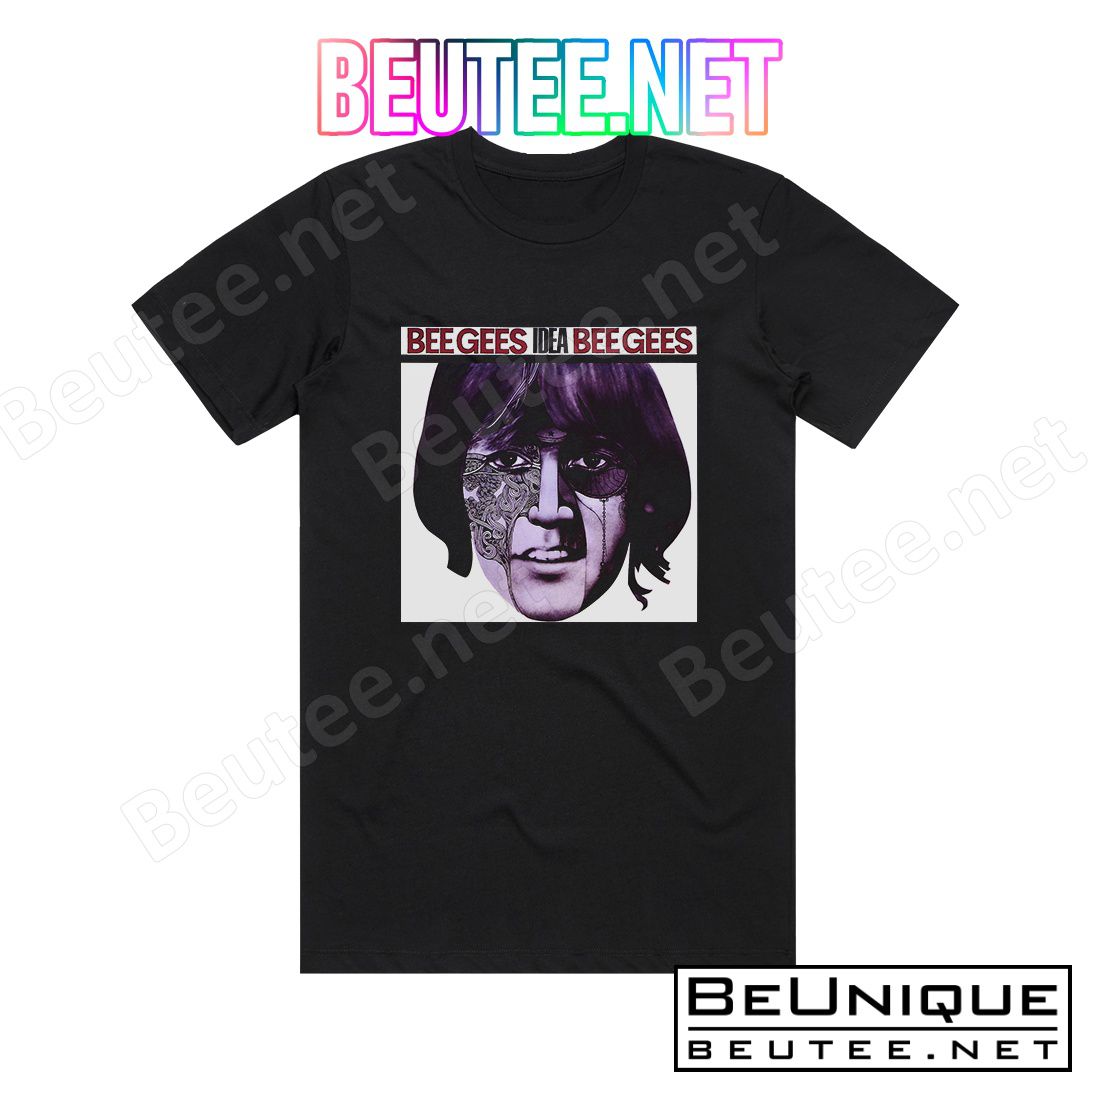 Bee Gees Idea 2 Album Cover T-Shirt